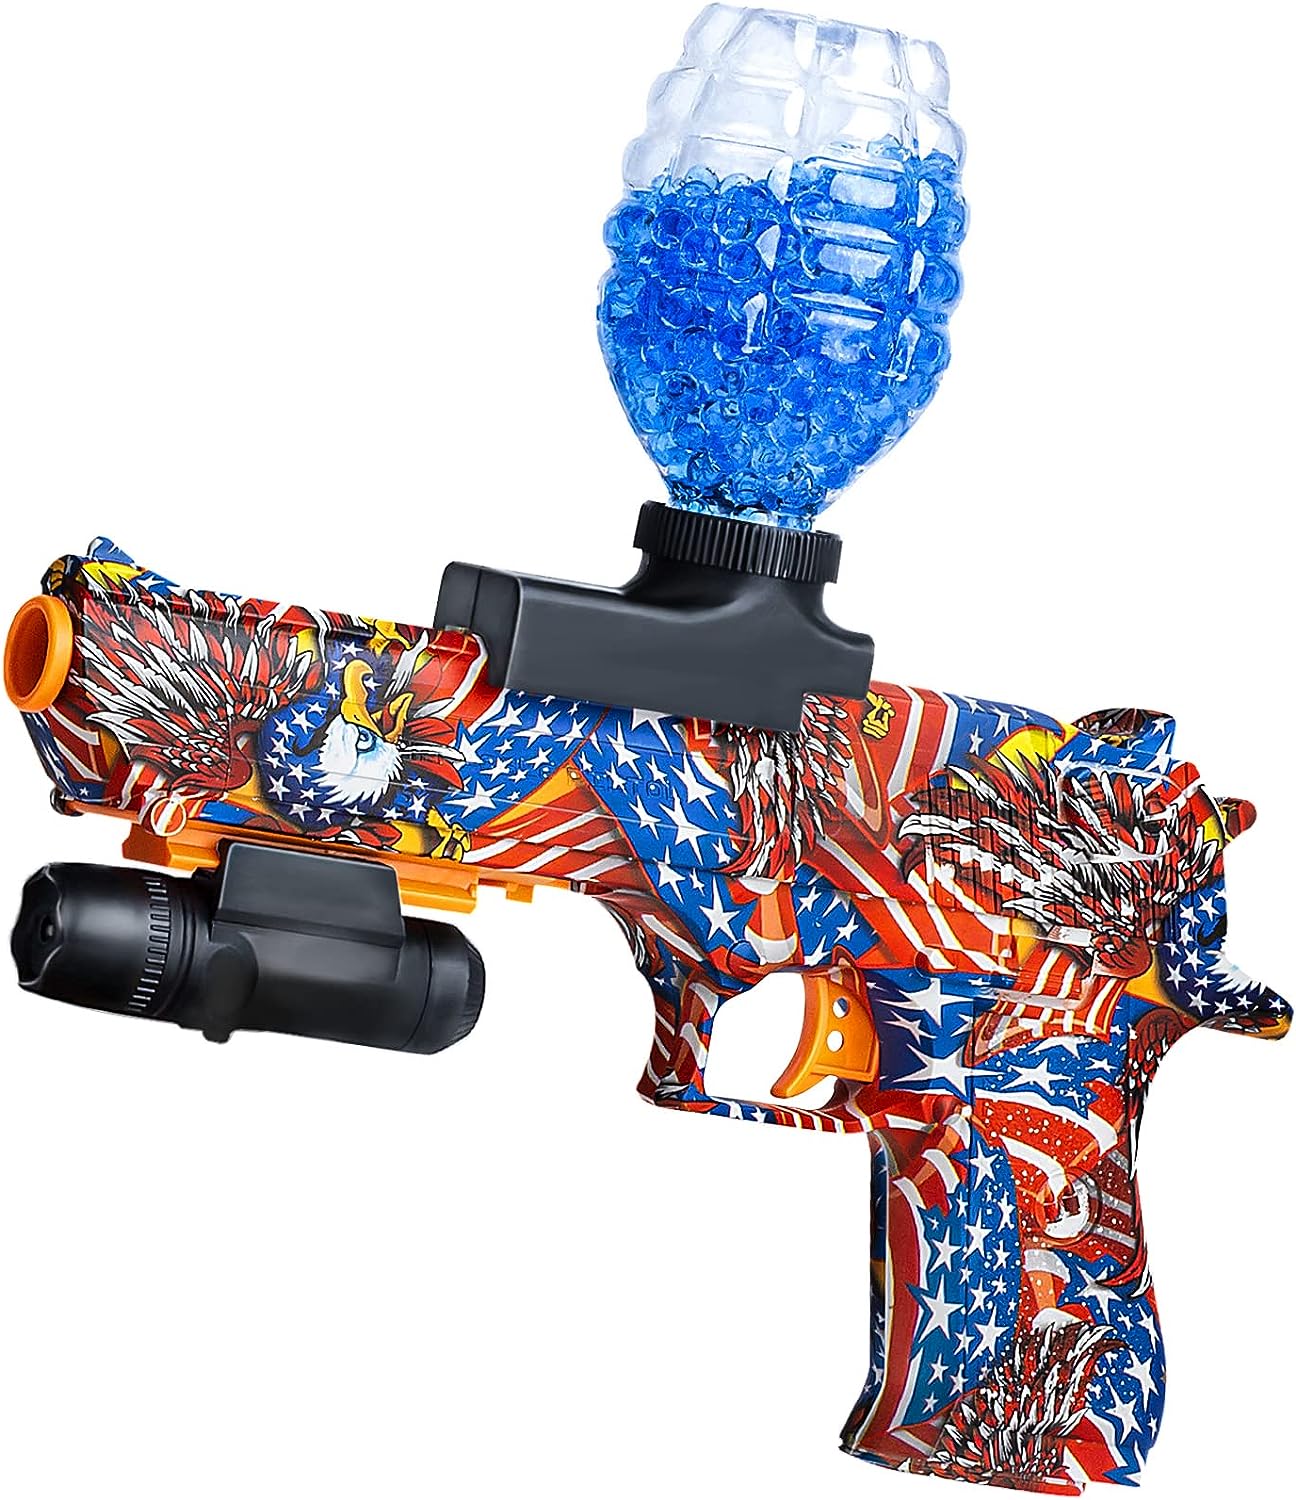 An American flag-themed gun that is an electric Gel Ball Blaster.